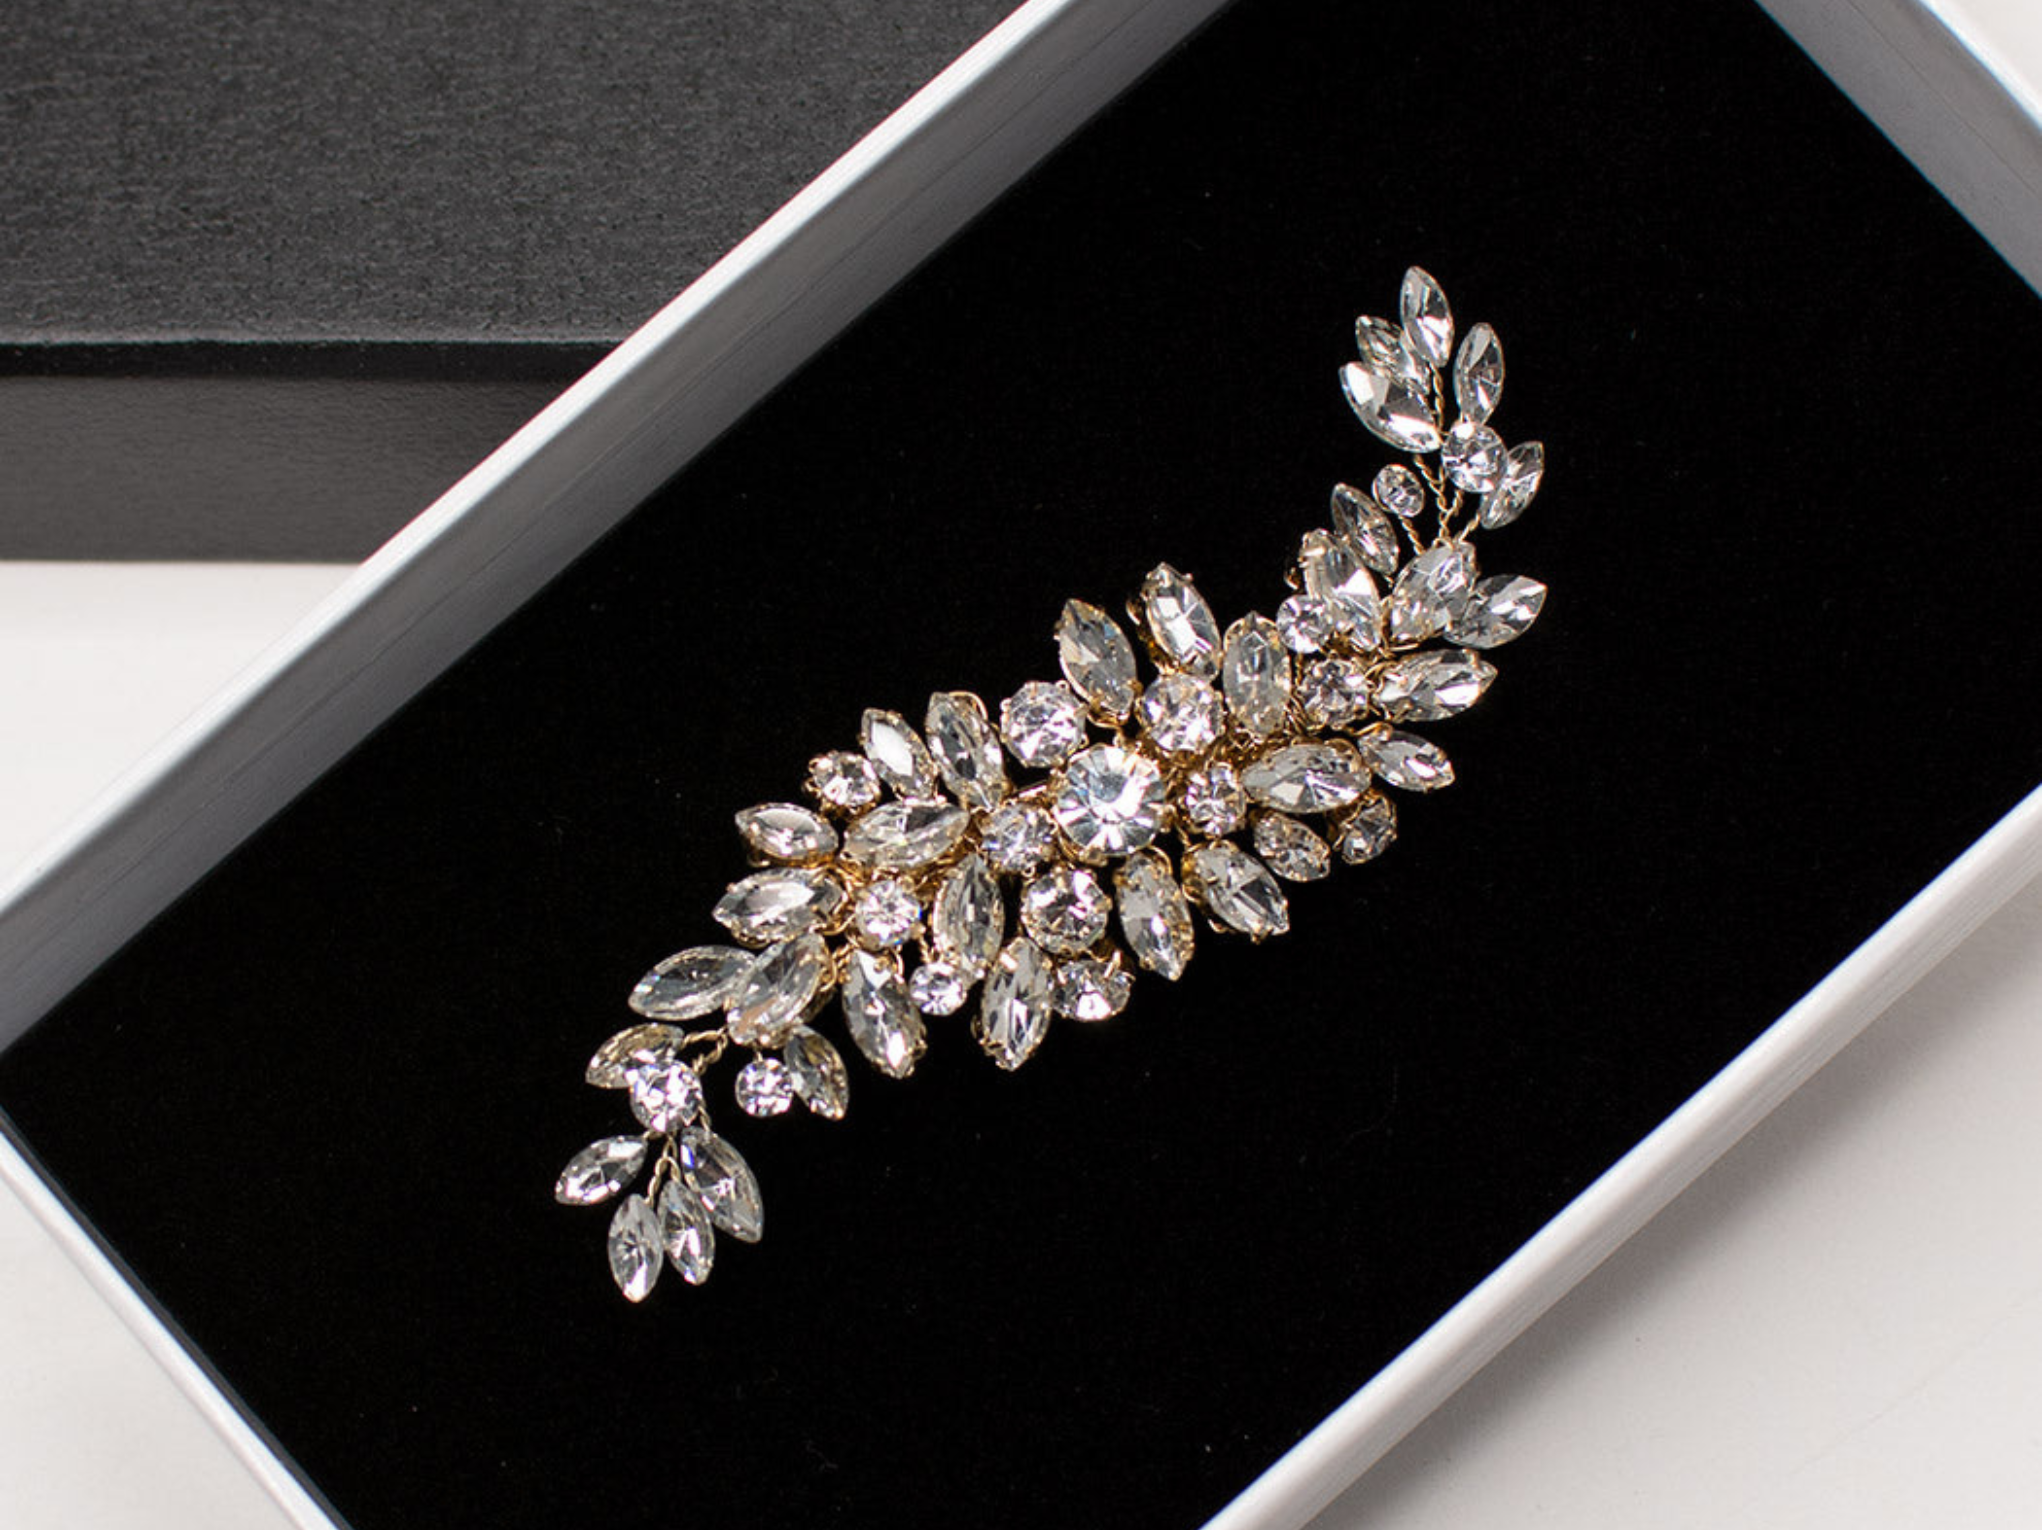 Celine - Luxurious Crystal Embellished Bridal Hair Clip